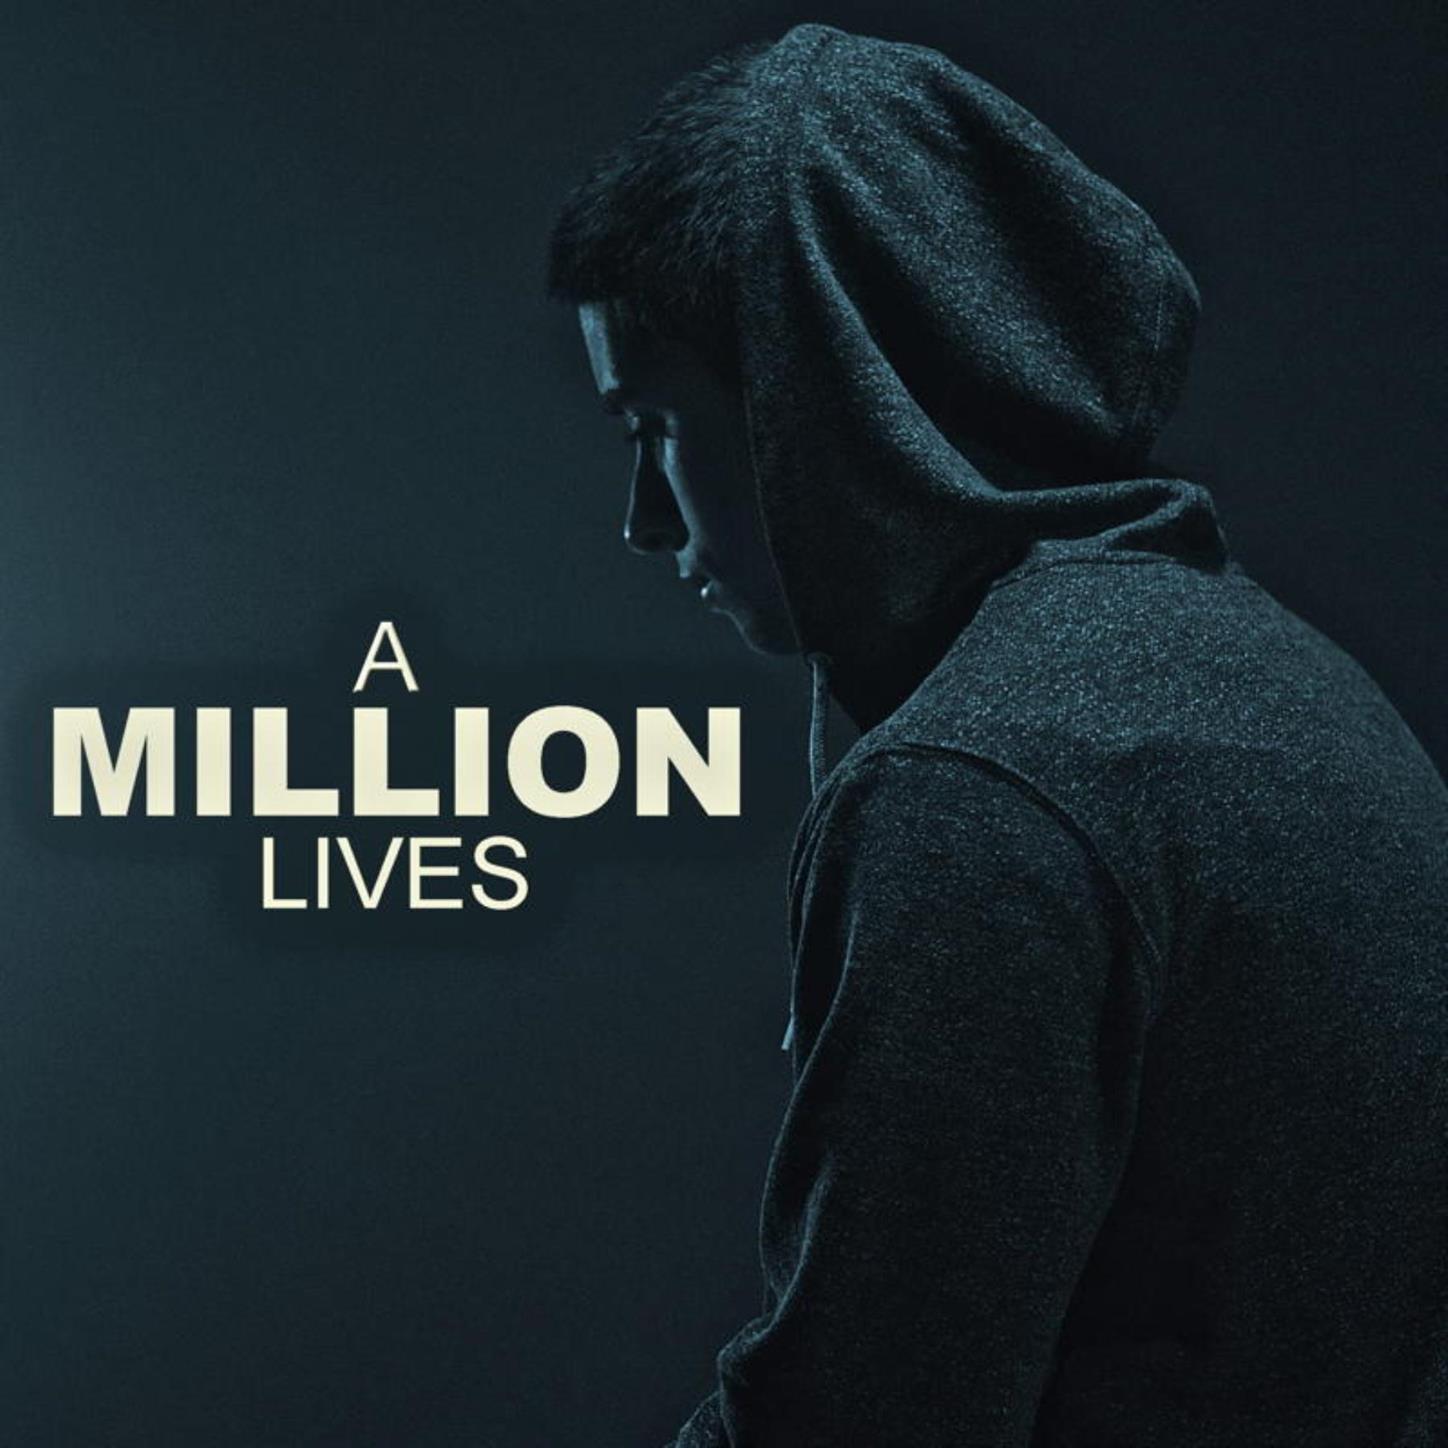 A Million Lives - Music Video